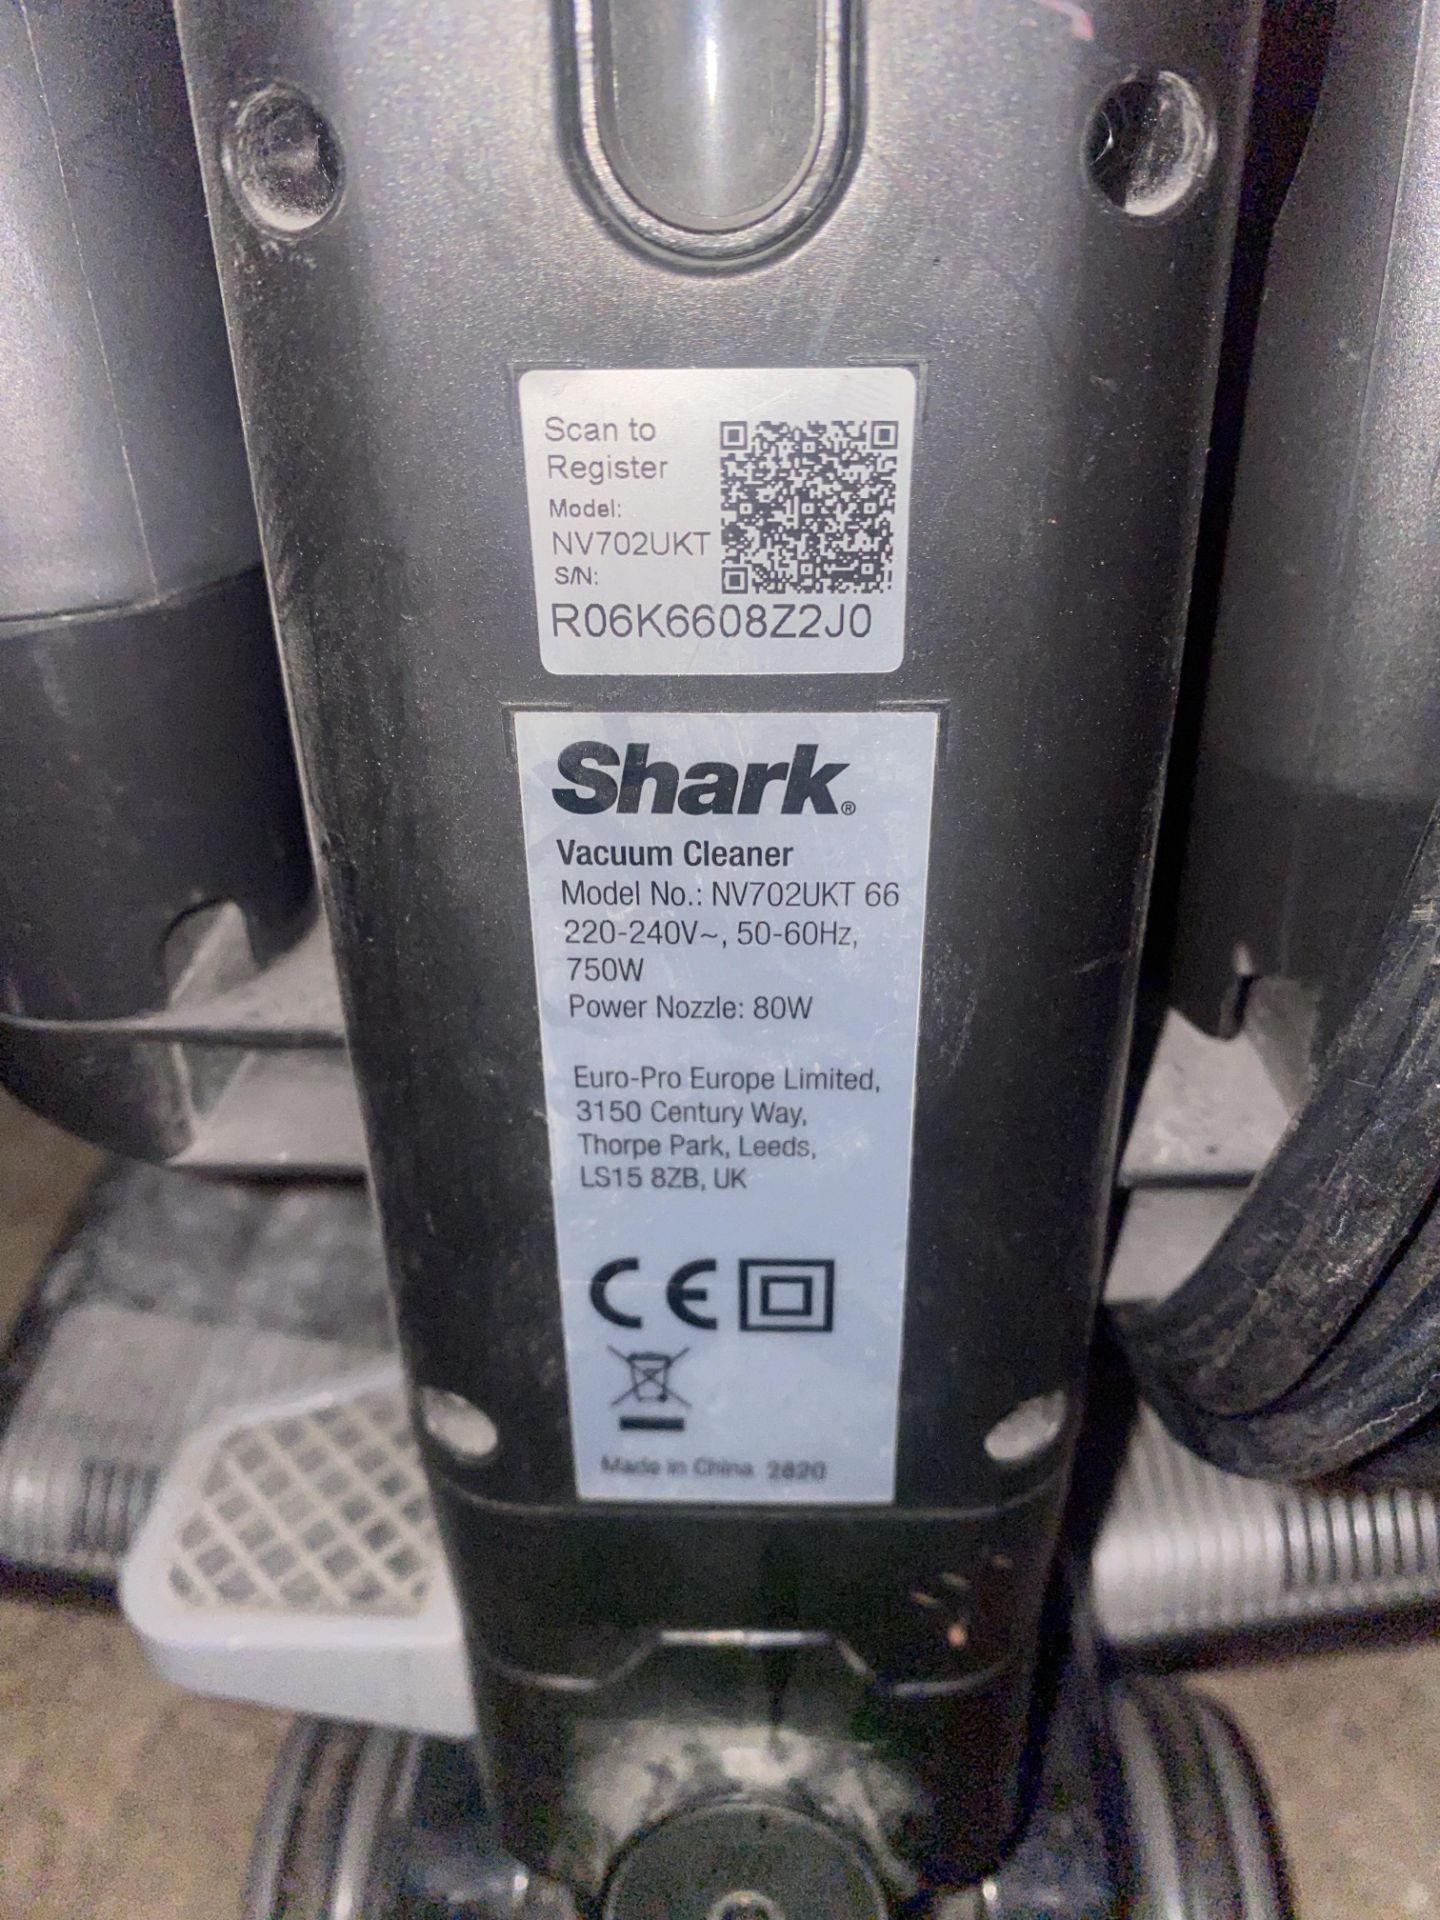 Shark Duo-Clean upright vacuum, model NV702UKT66 - Image 3 of 4